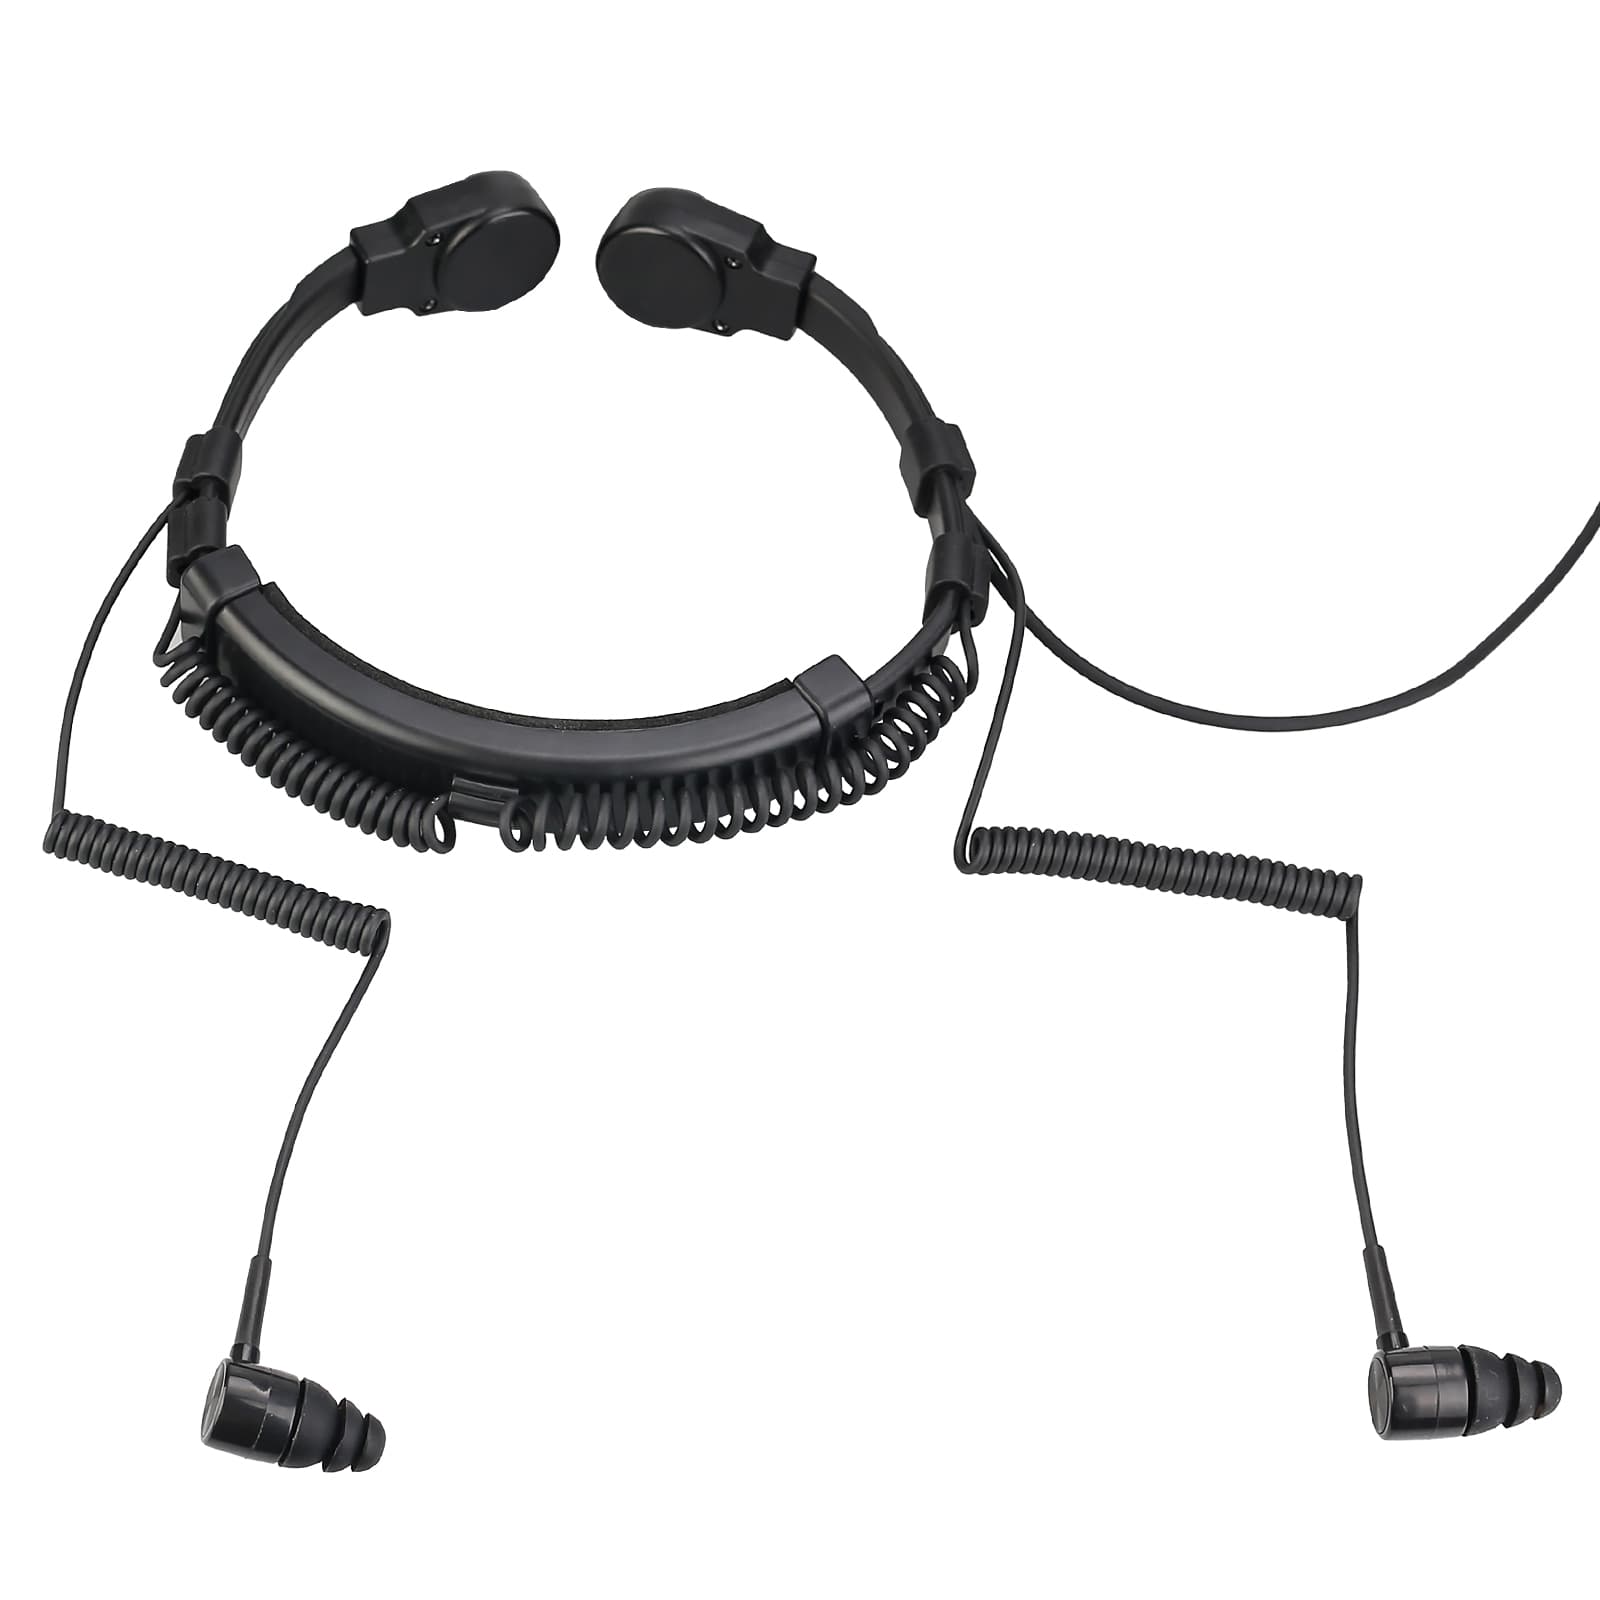 ETK007 noise reduction cycling headset